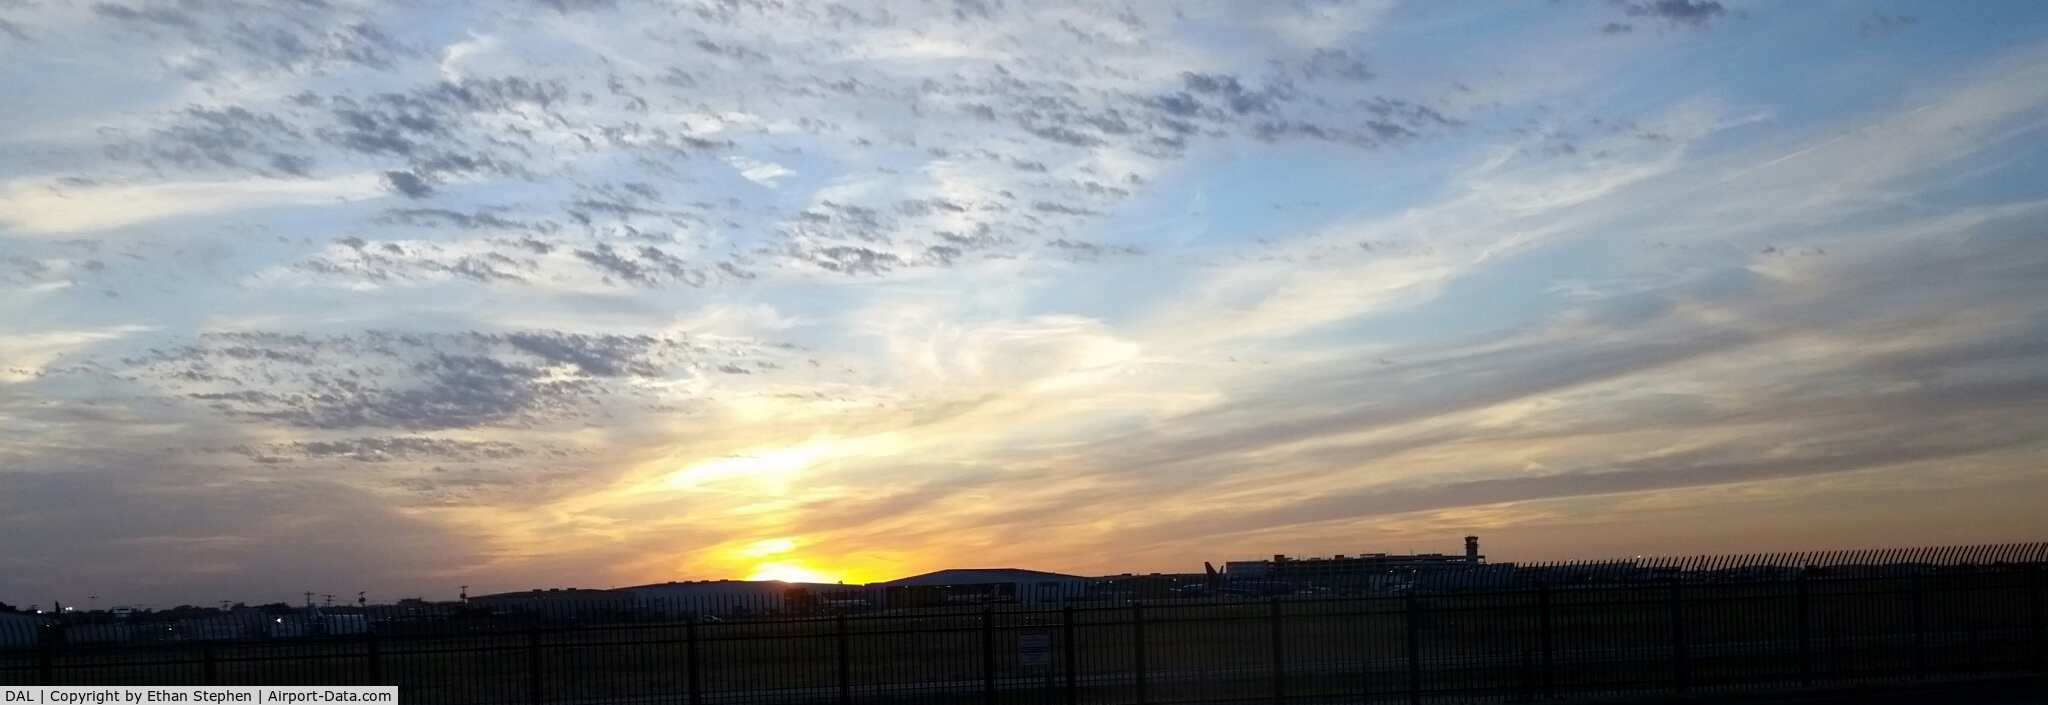 Dallas Love Field Airport (DAL) - Older sunset shot